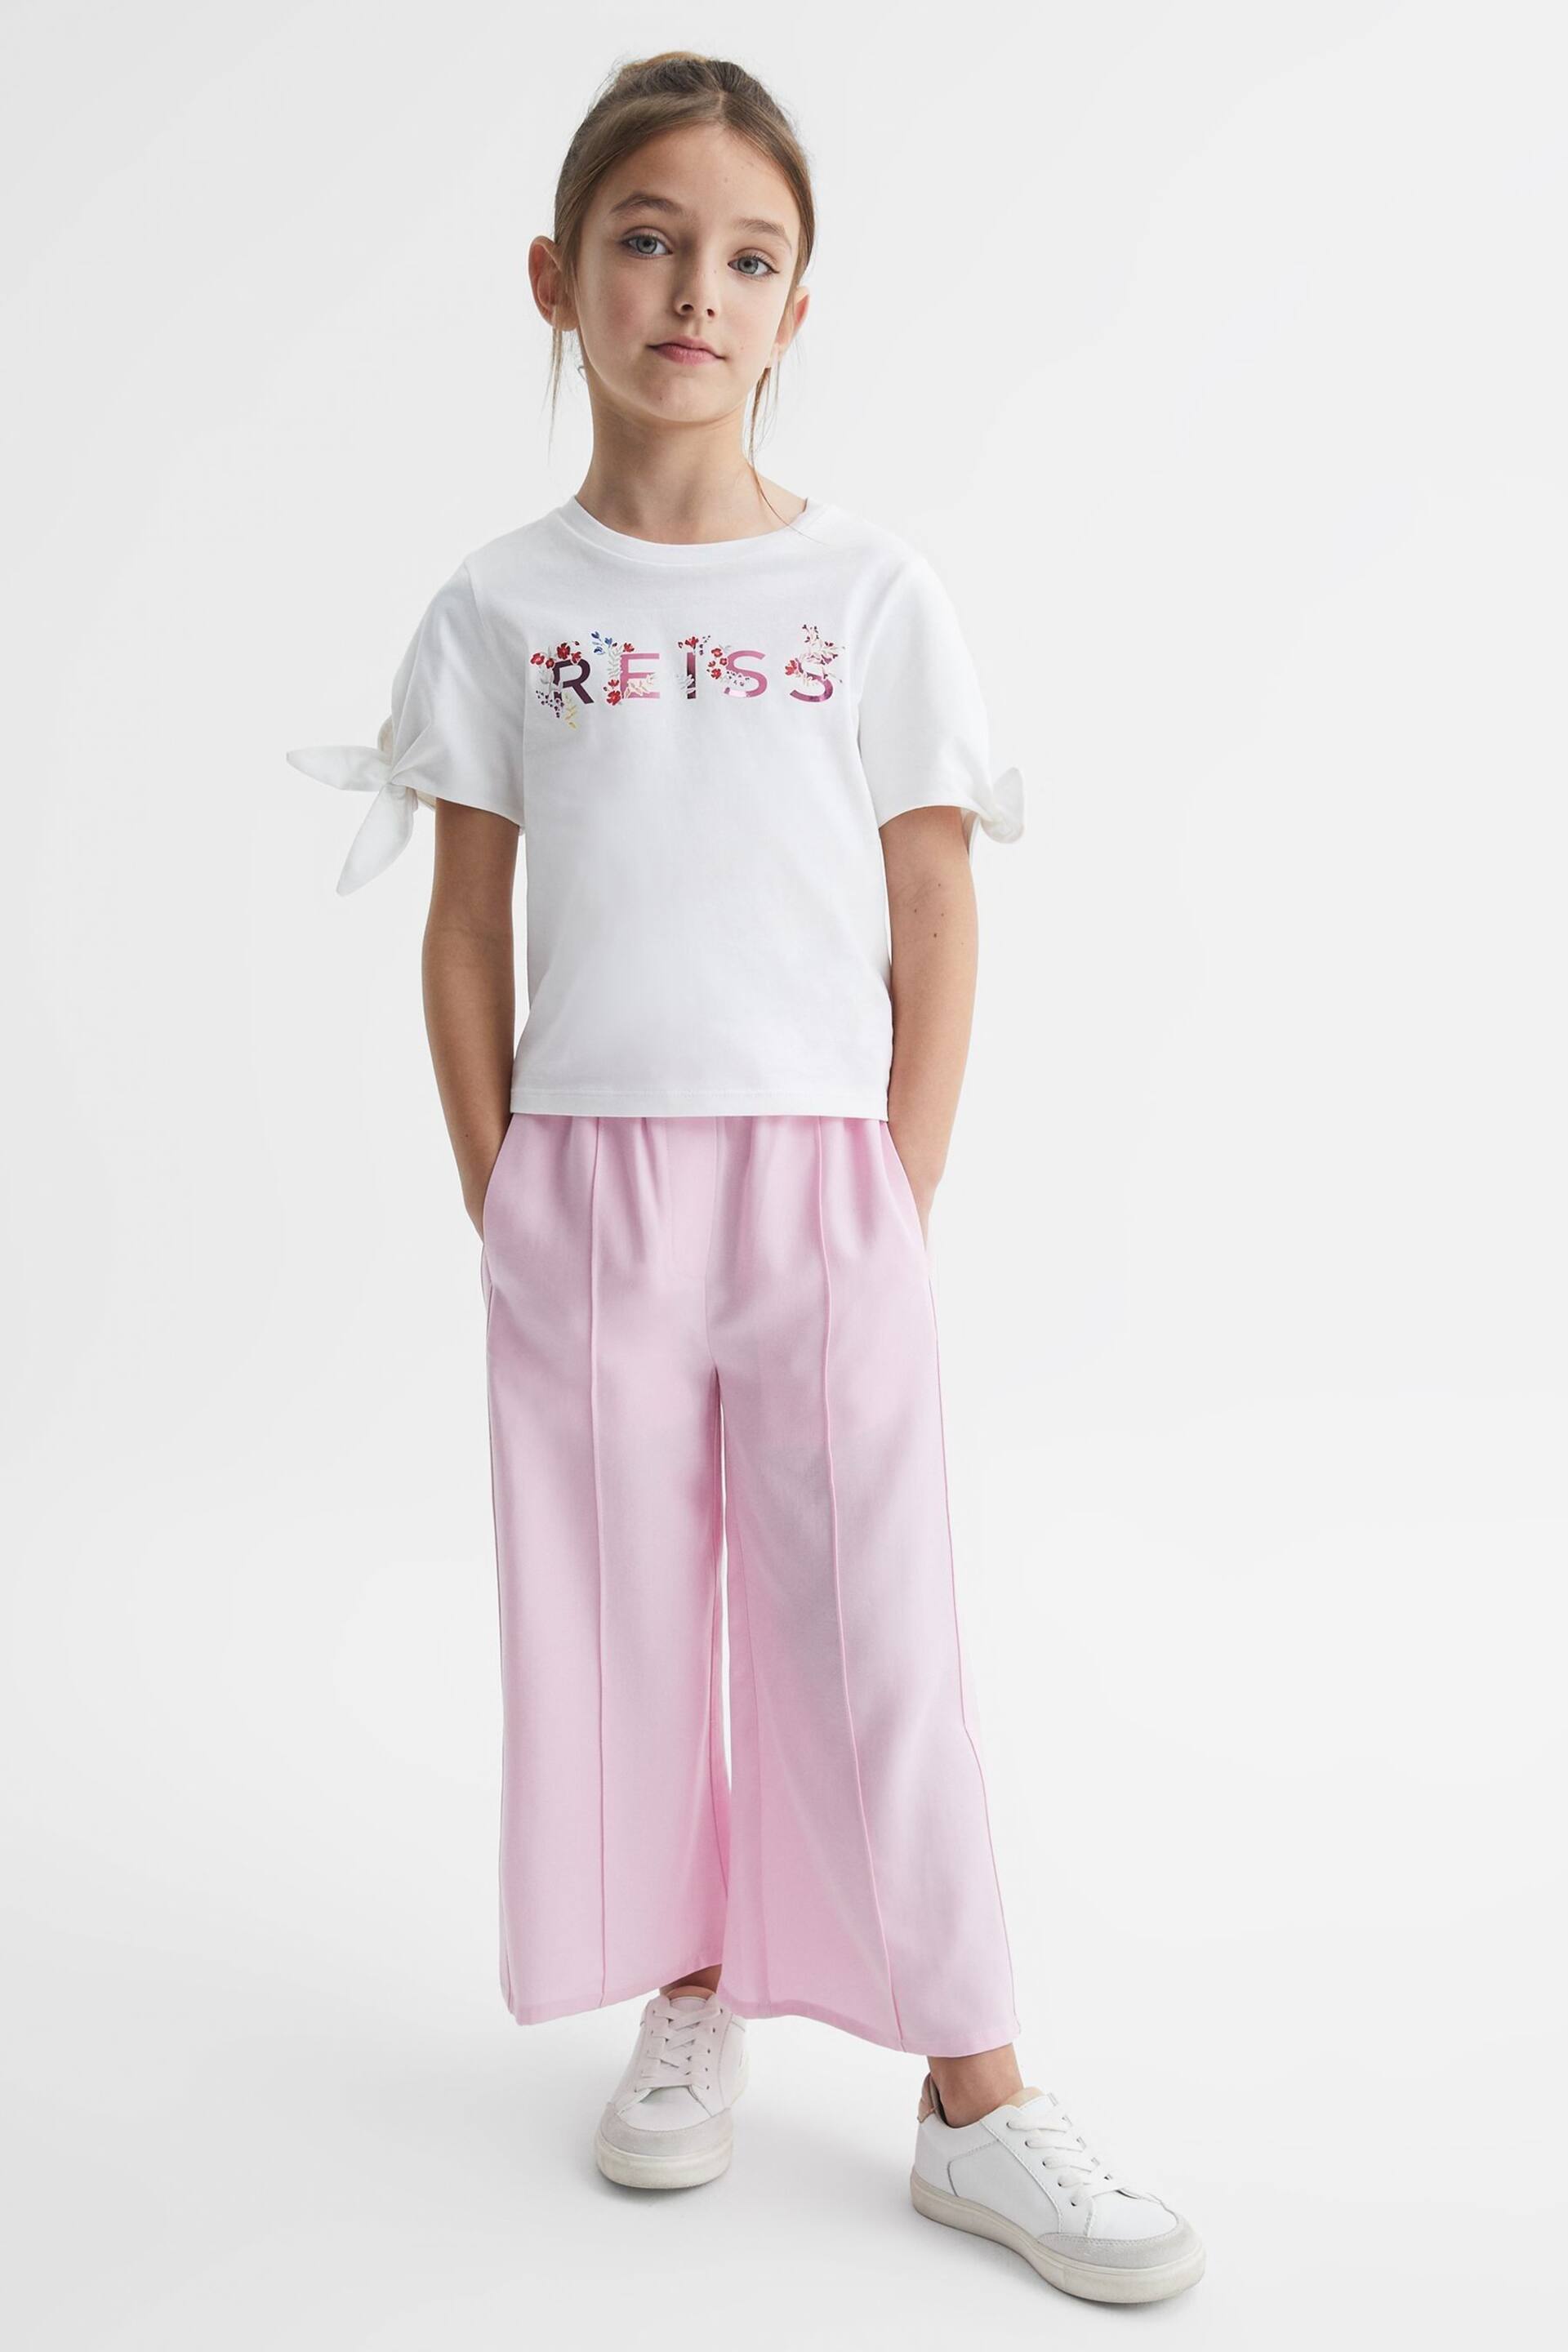 Reiss Pink Print Tally Senior Printed Cotton T-Shirt - Image 1 of 6